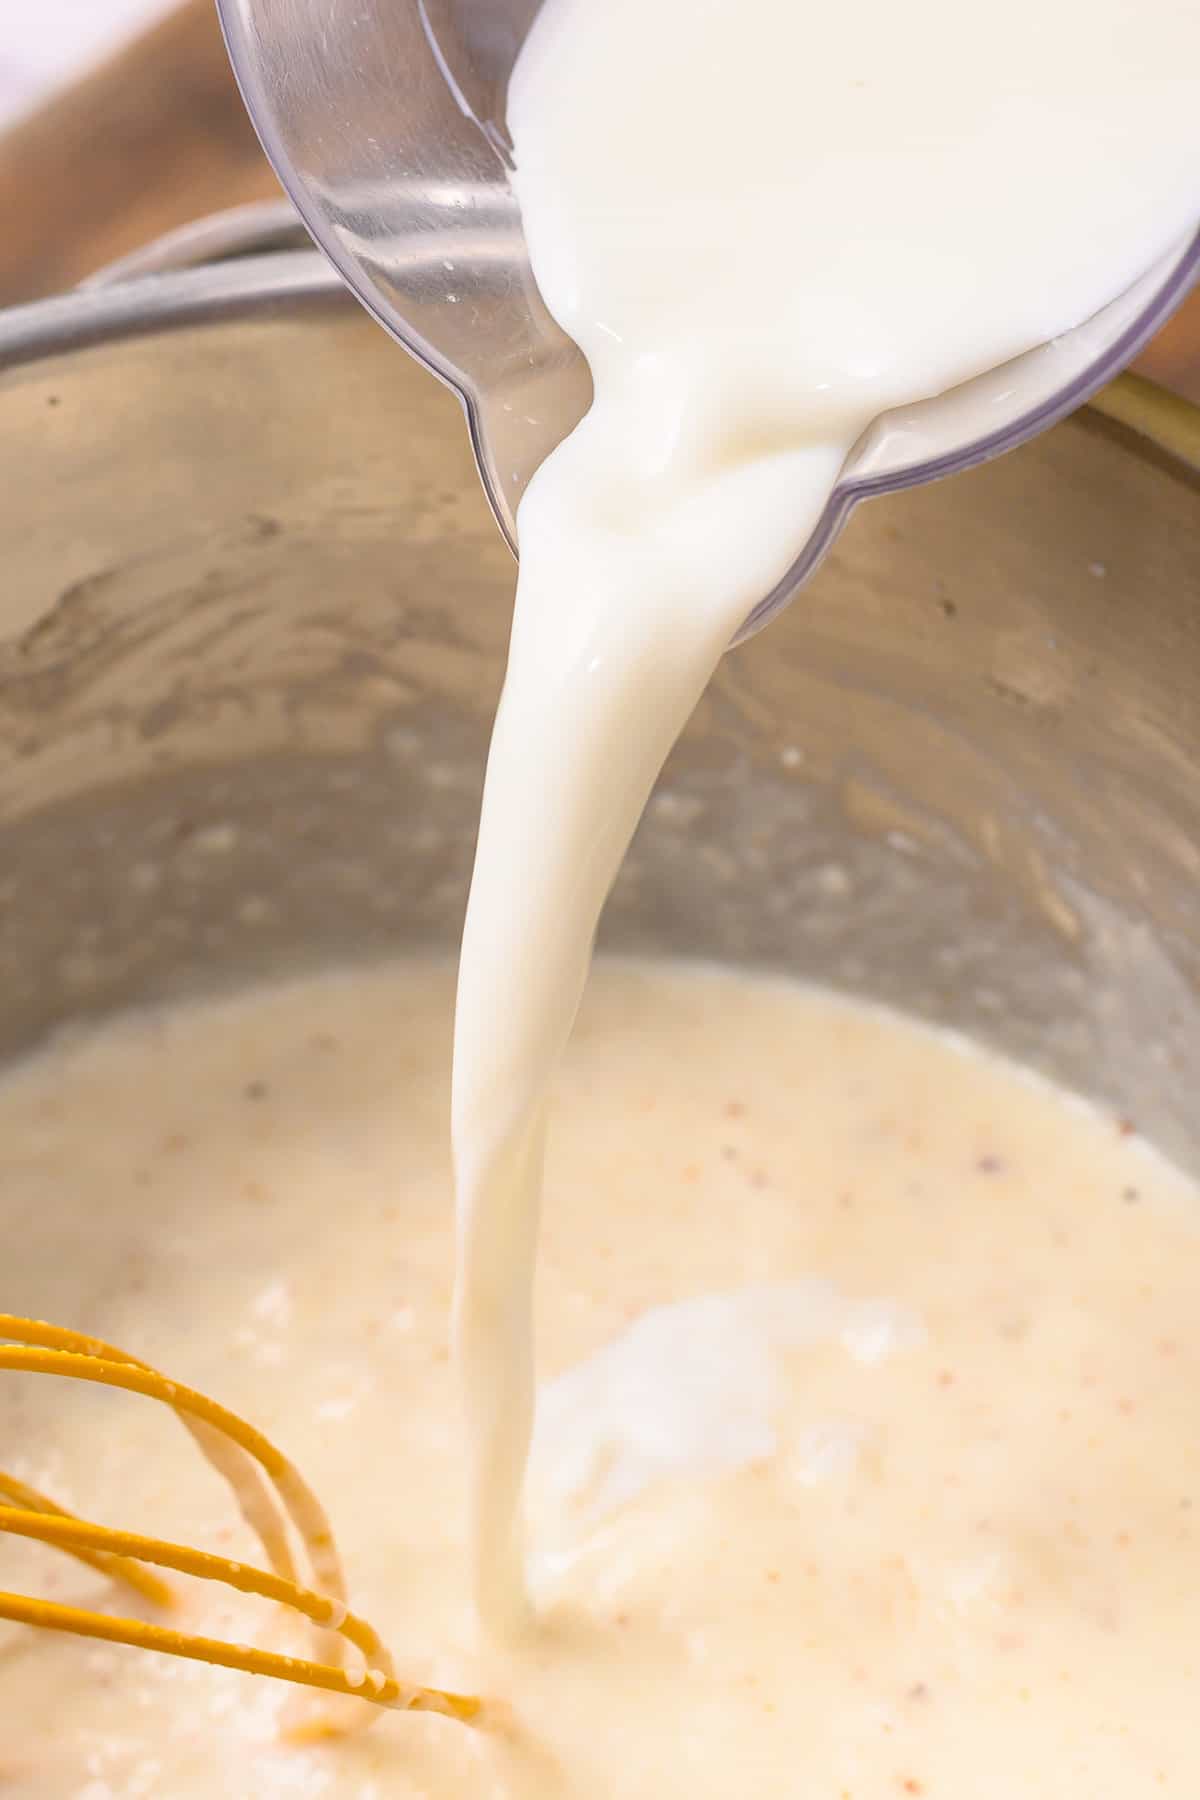 Adding milk to Creamed Peas mixture in saucepan